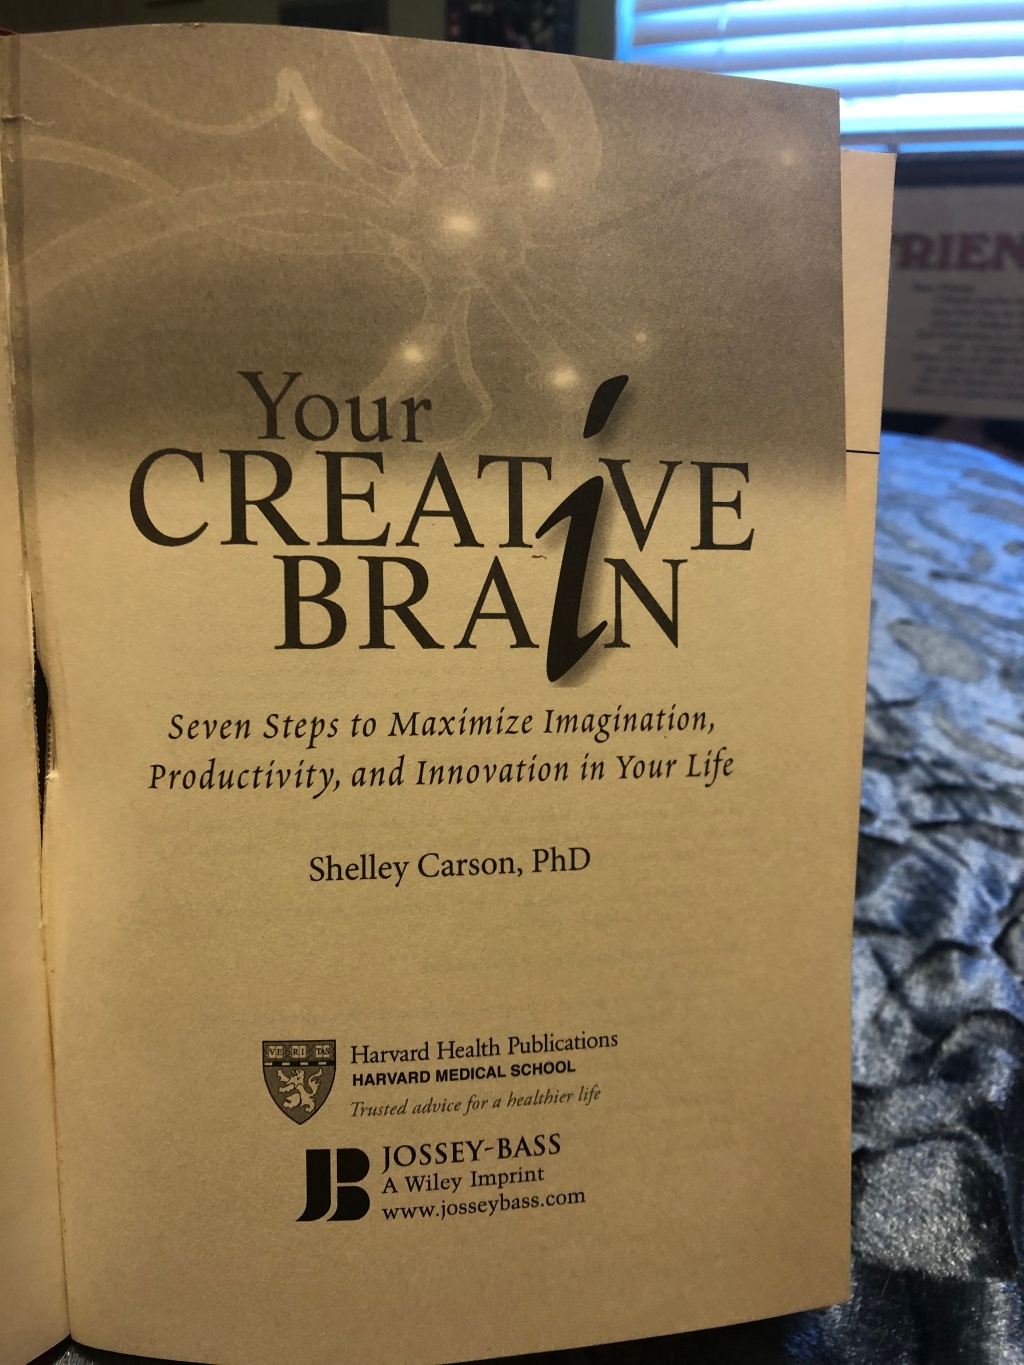 Feel-Good Friday Book Series: Your Creative Brain